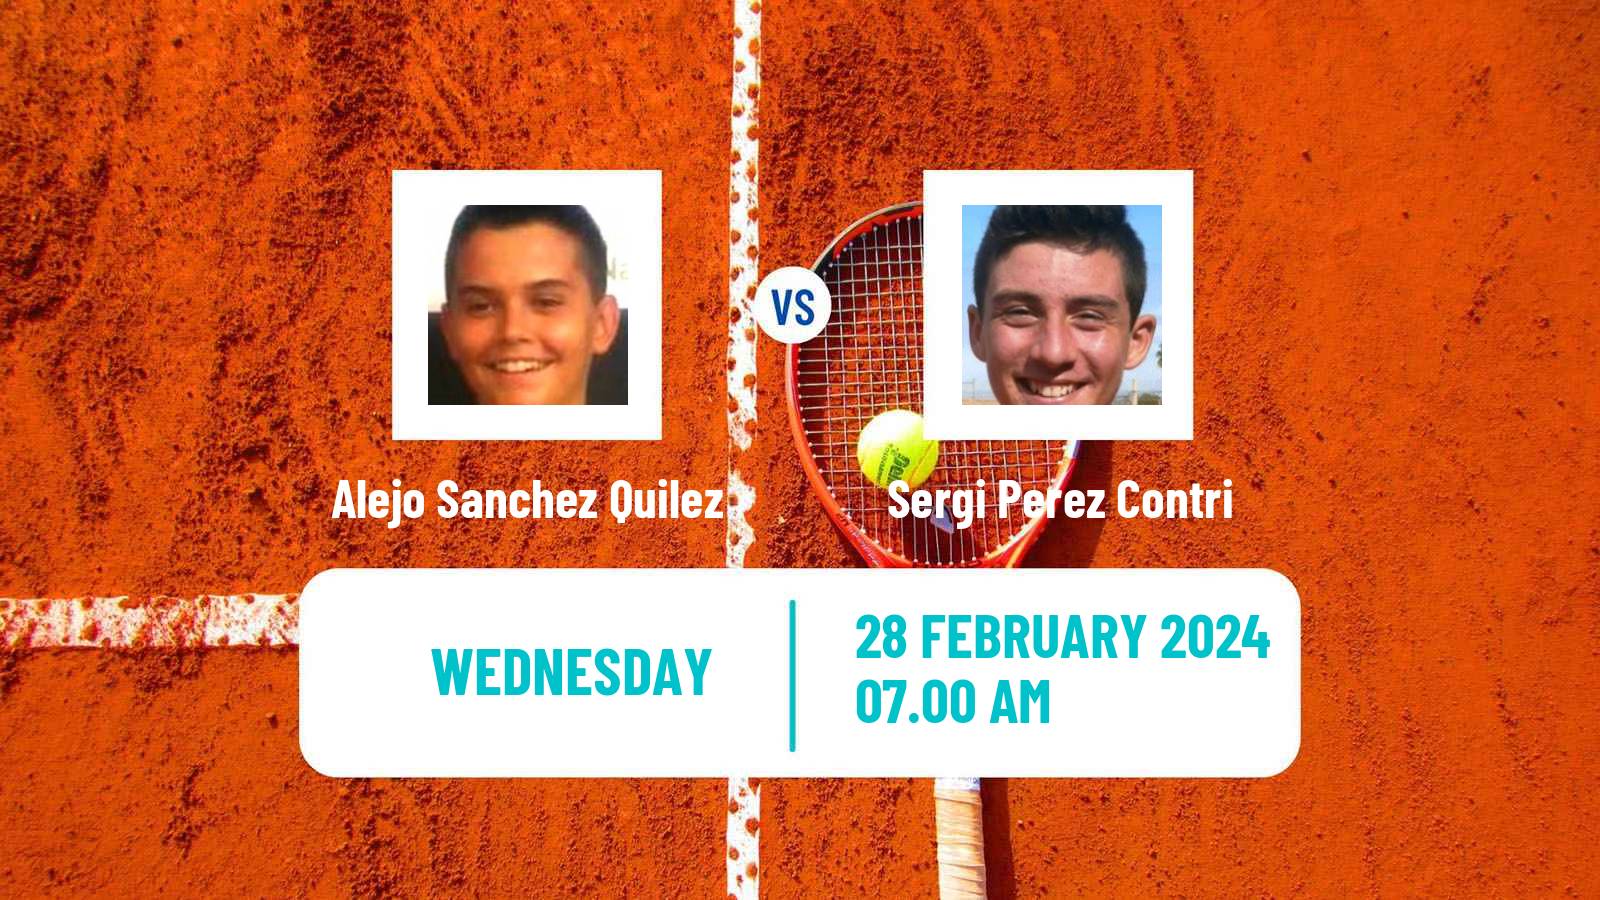 Tennis ITF M15 Villena 2 Men Alejo Sanchez Quilez - Sergi Perez Contri